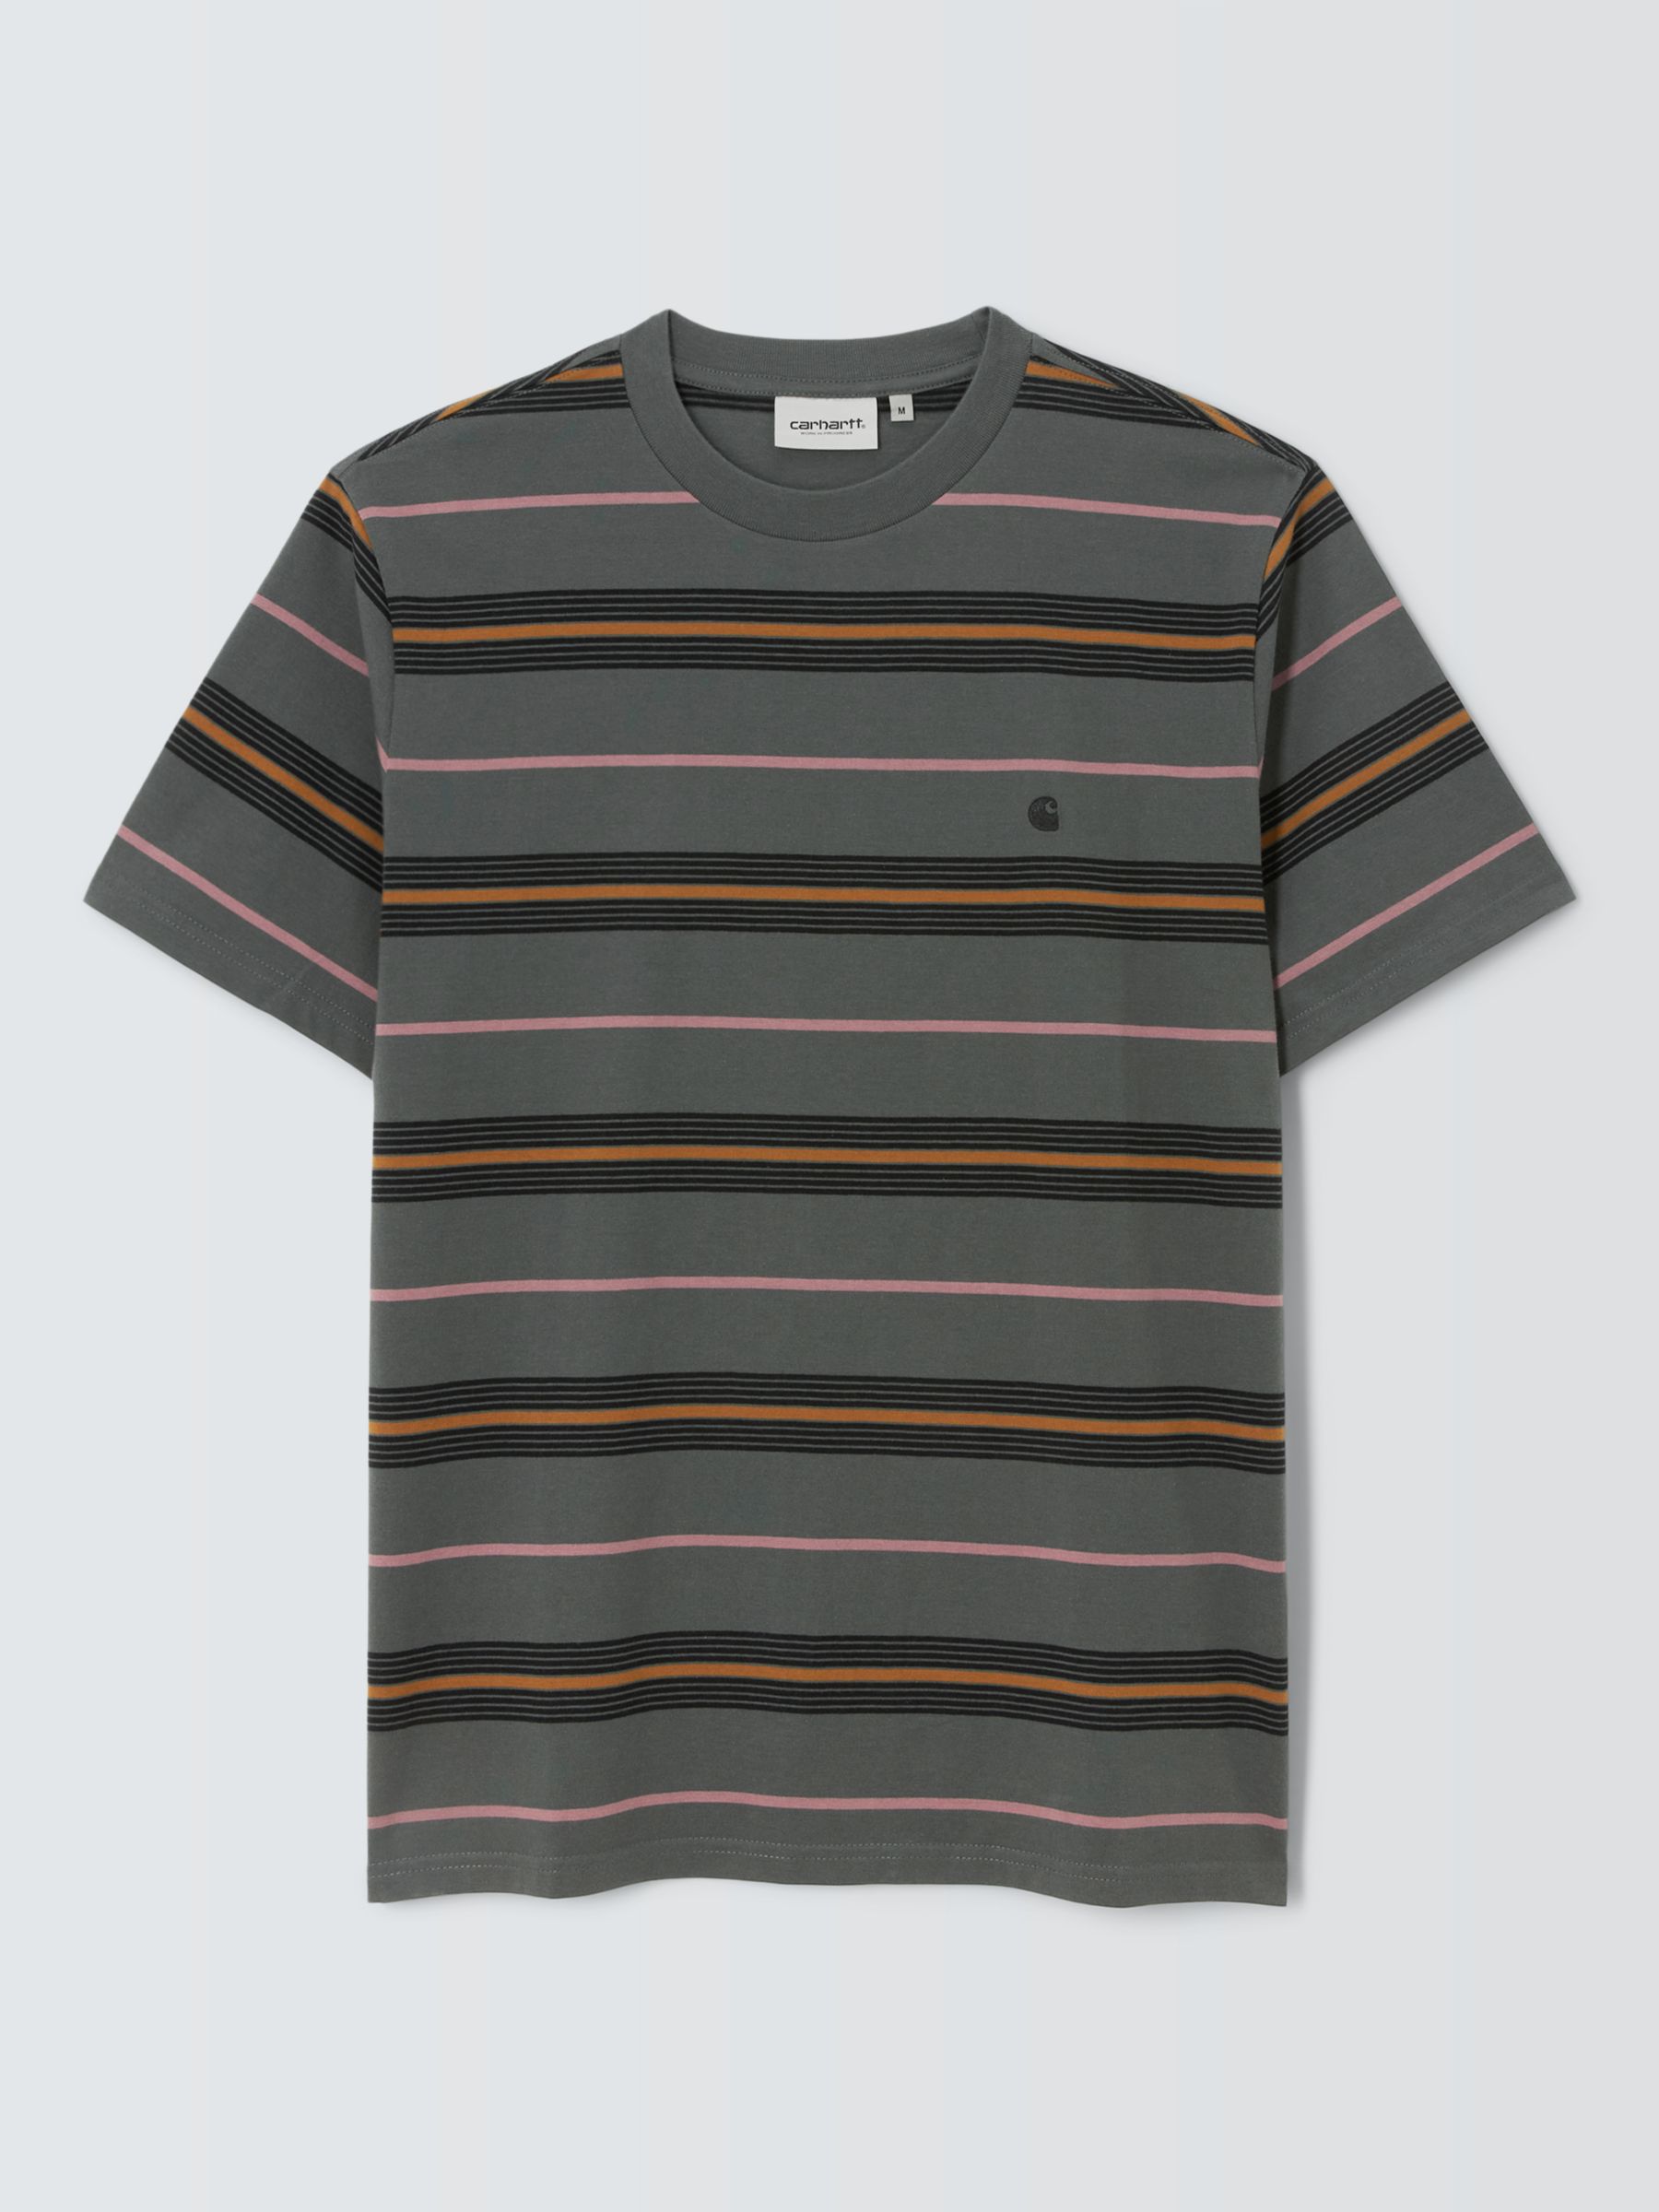 Carhartt WIP Striped Cotton T-Shirt, Multi, XL